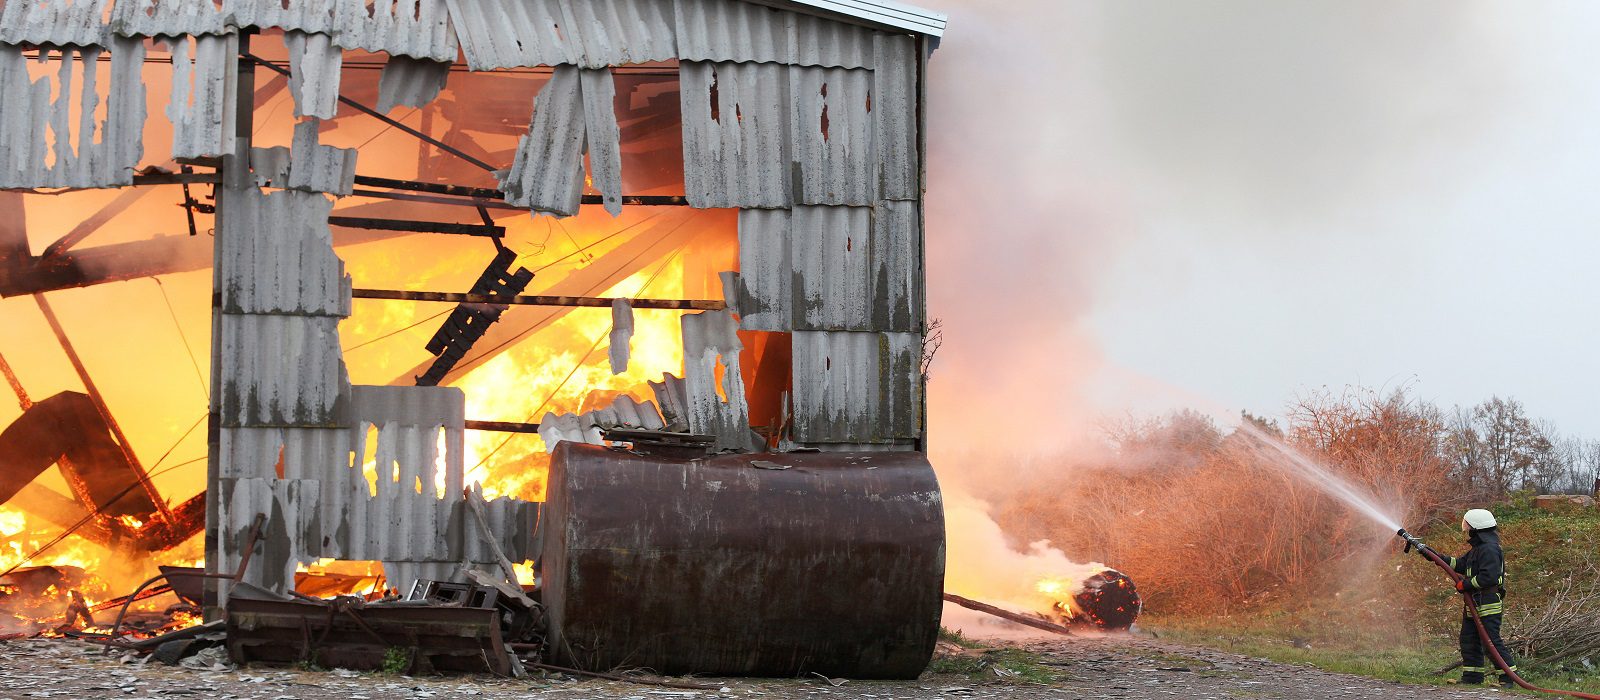 Burning farm building with hay